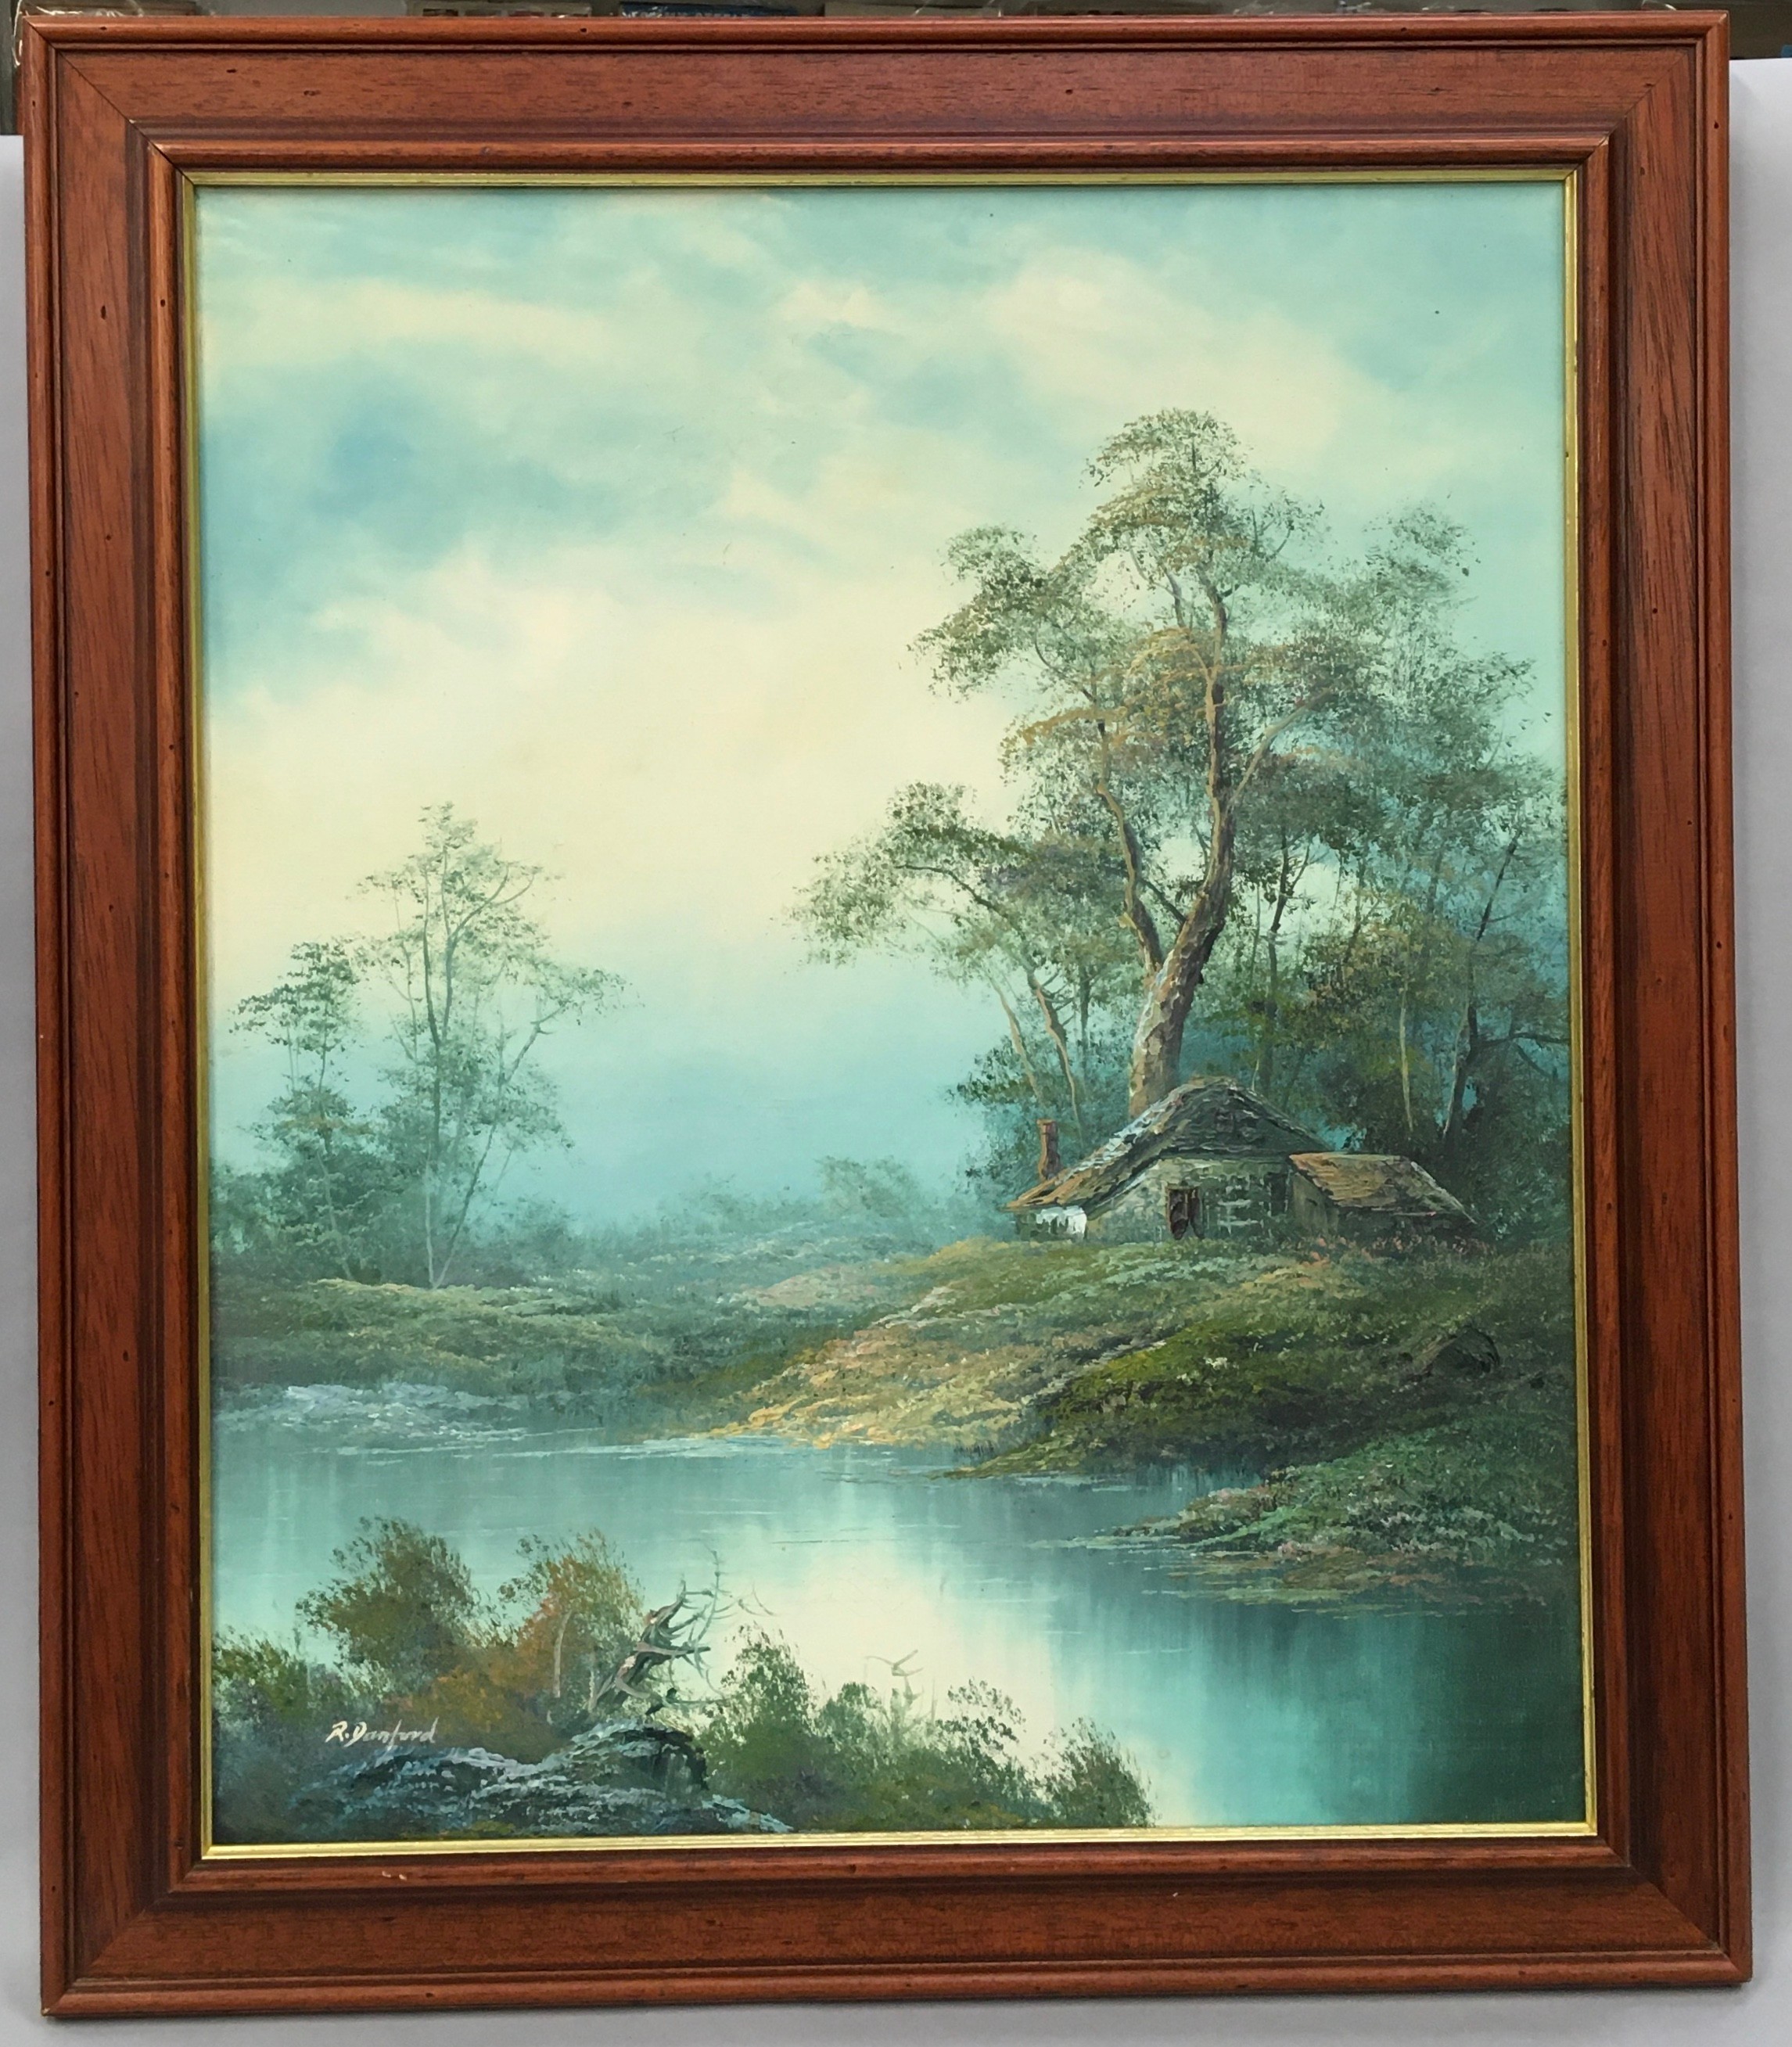 R. Danford art oil on canvas depicting autumn river scene signed to bottom left side 63x73cm